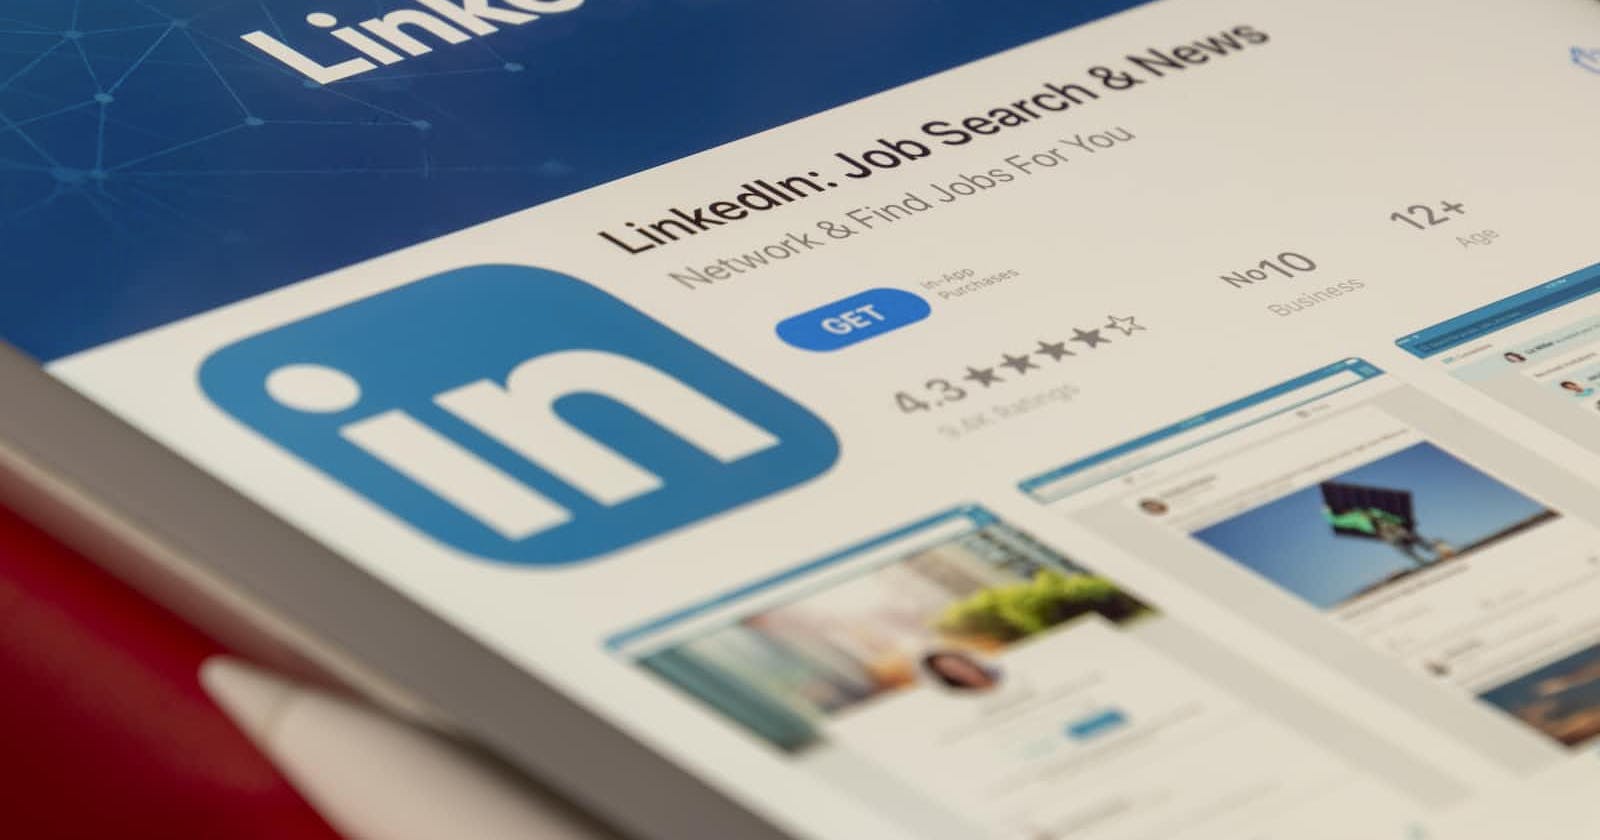 LinkedIn: Use it the right way!